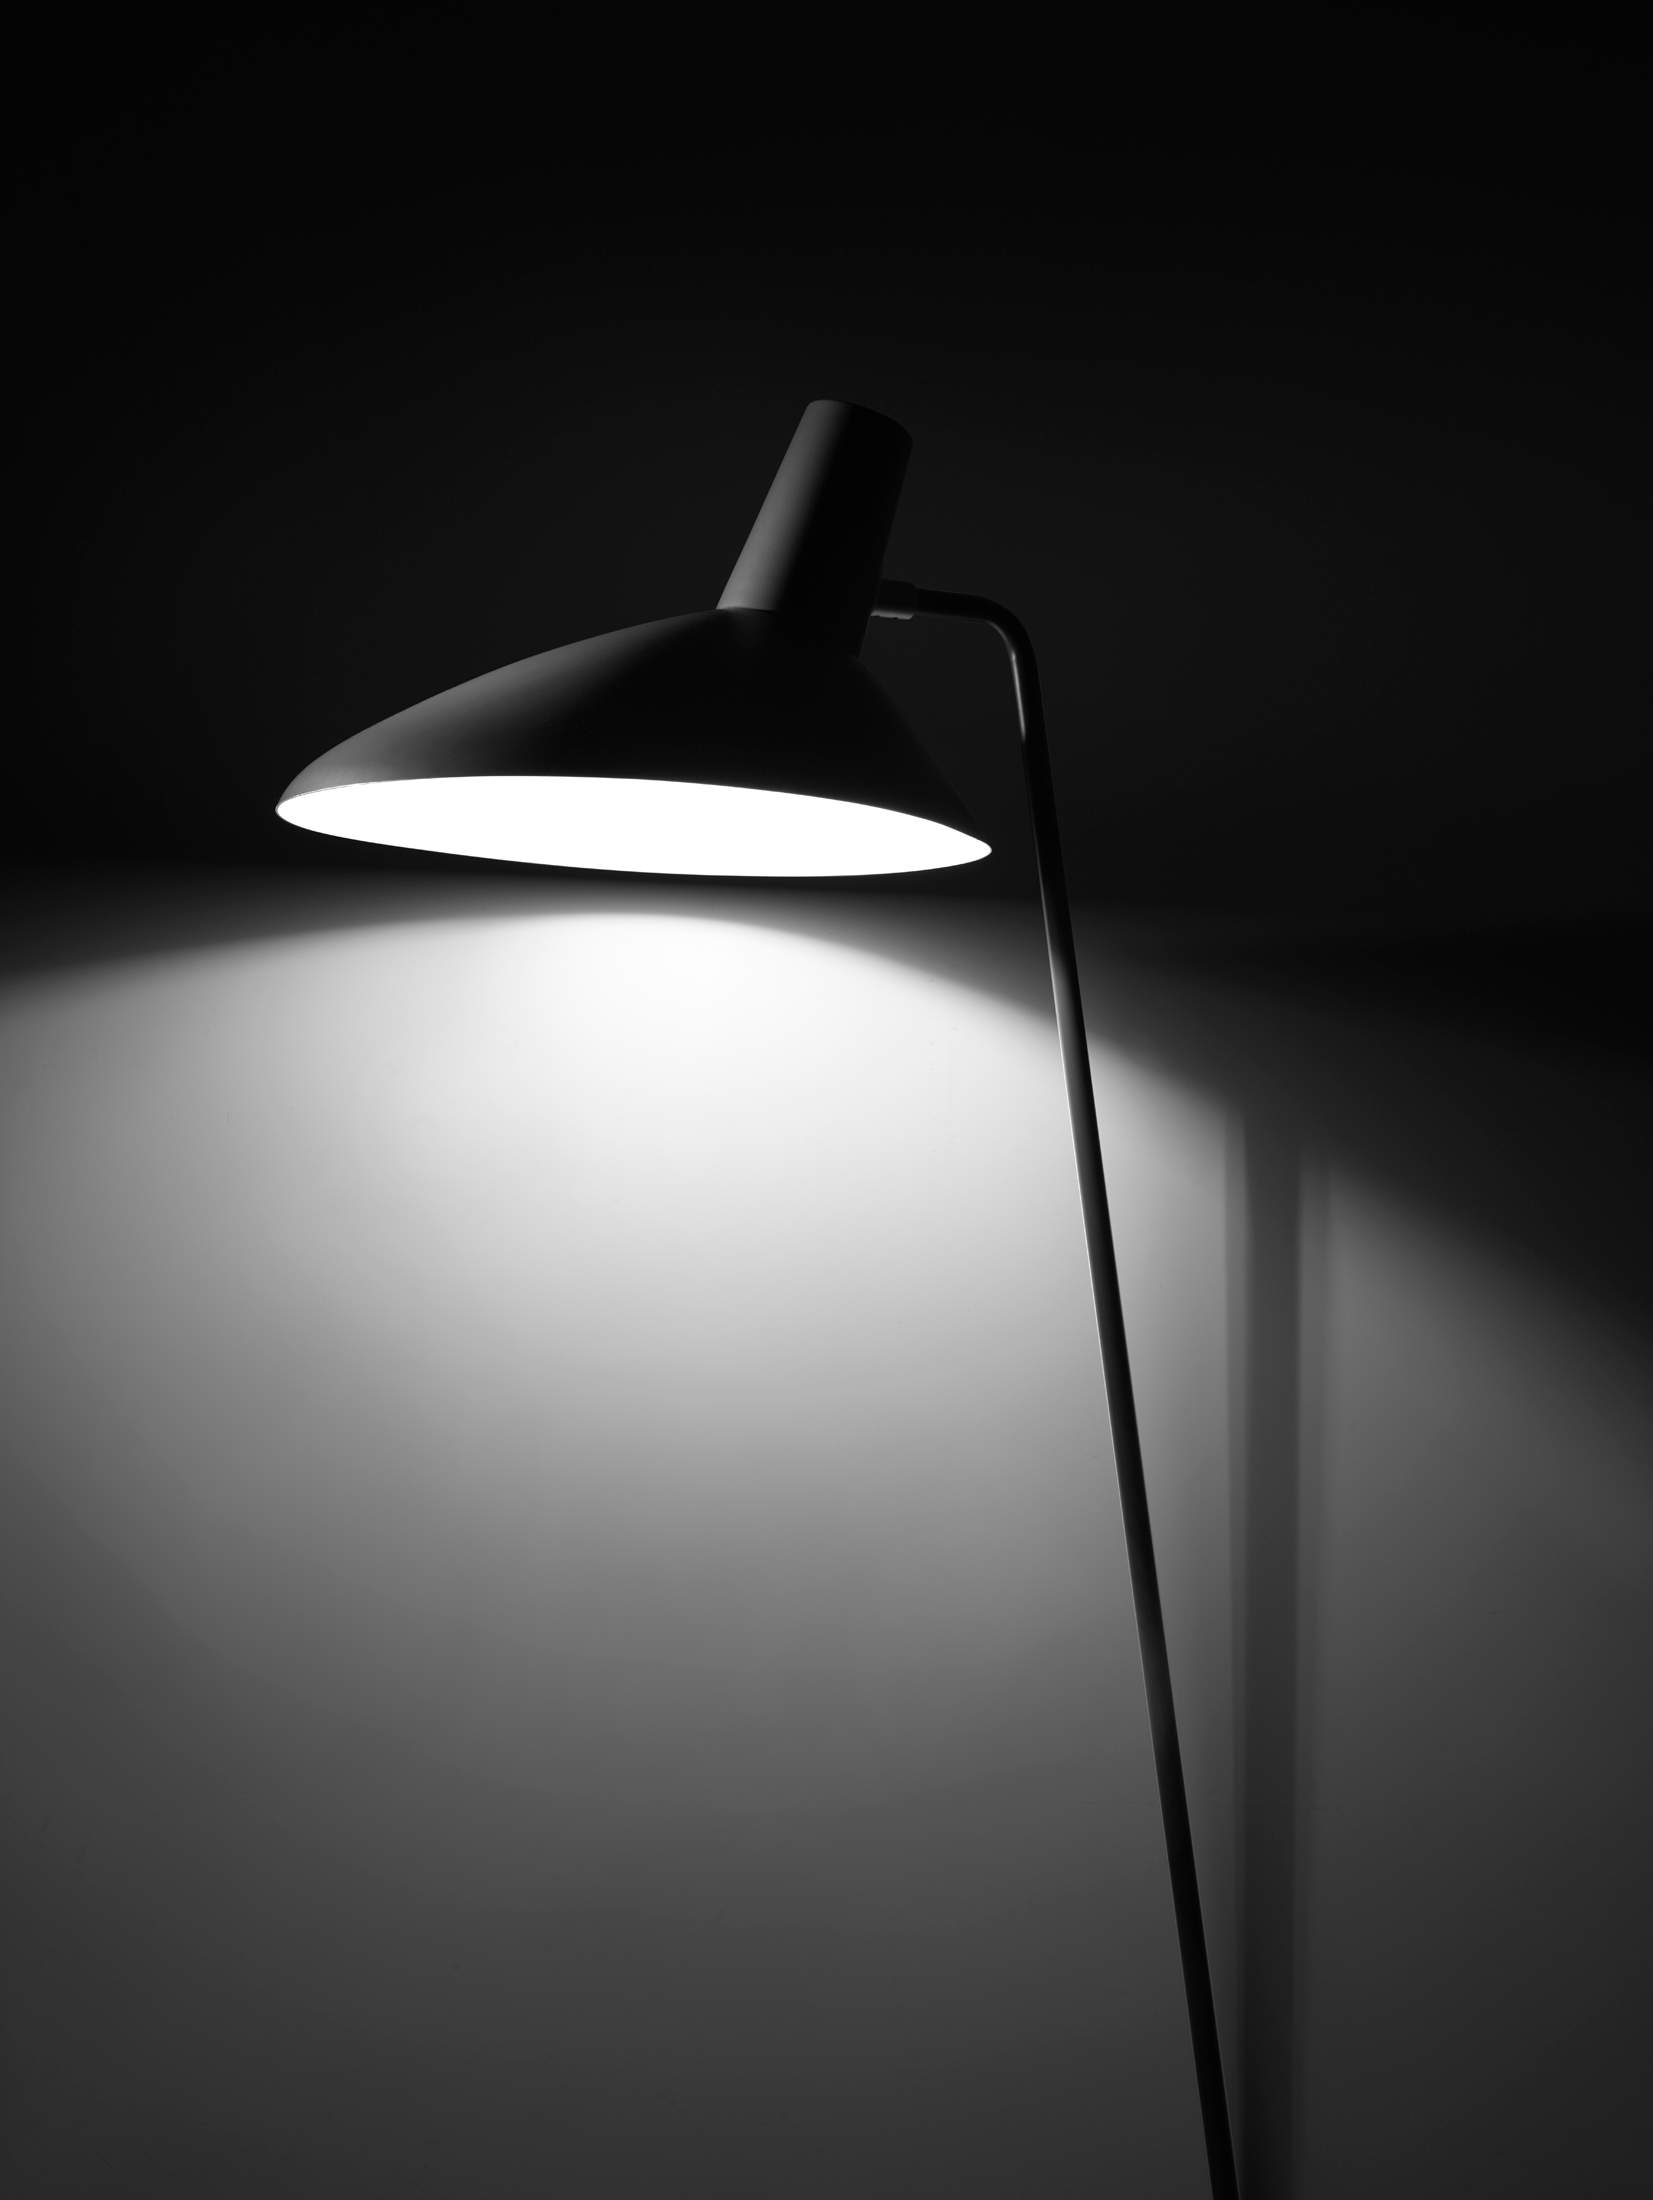 rf4388_monocle_expo_lamp.jpg